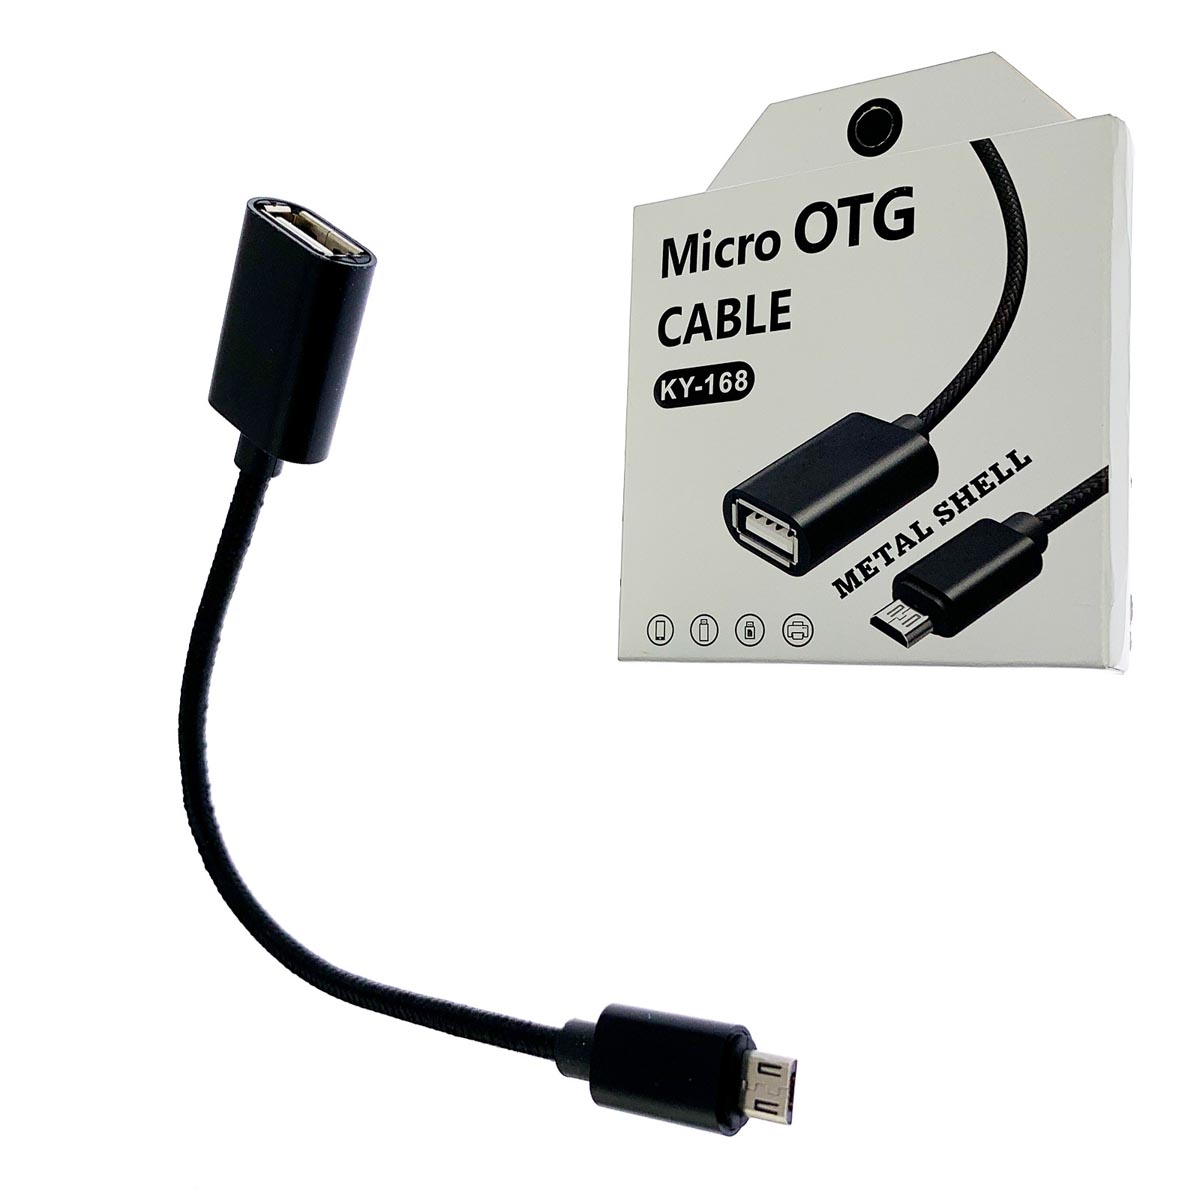 OTG переходник, адаптер, конвертер KY-168 на Micro-USB, длина кабеля 10 см, цвет черный